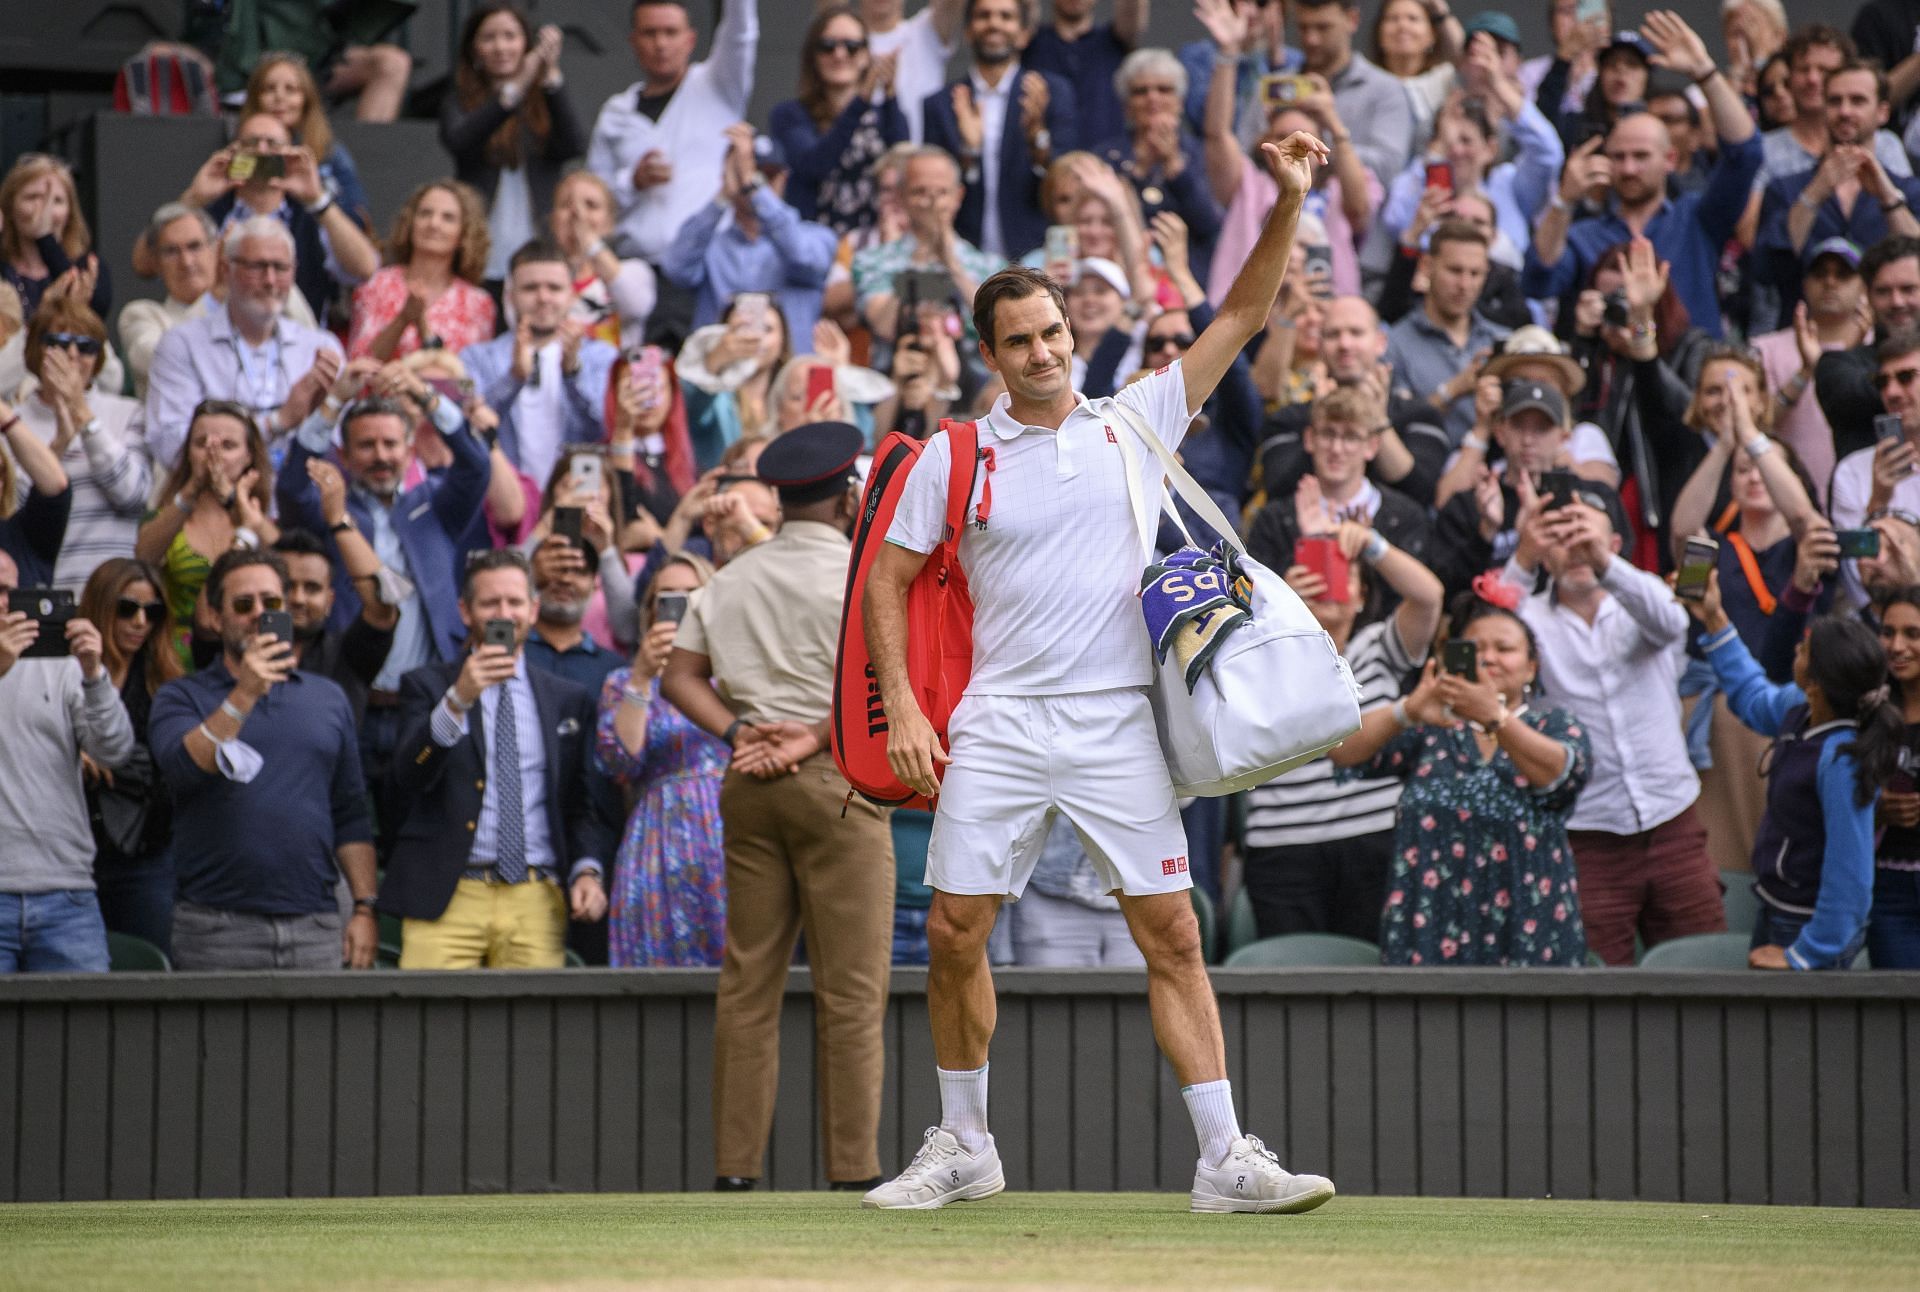 Roger Federer after losing to Hubert Hurkacz at Wimbledon 2021